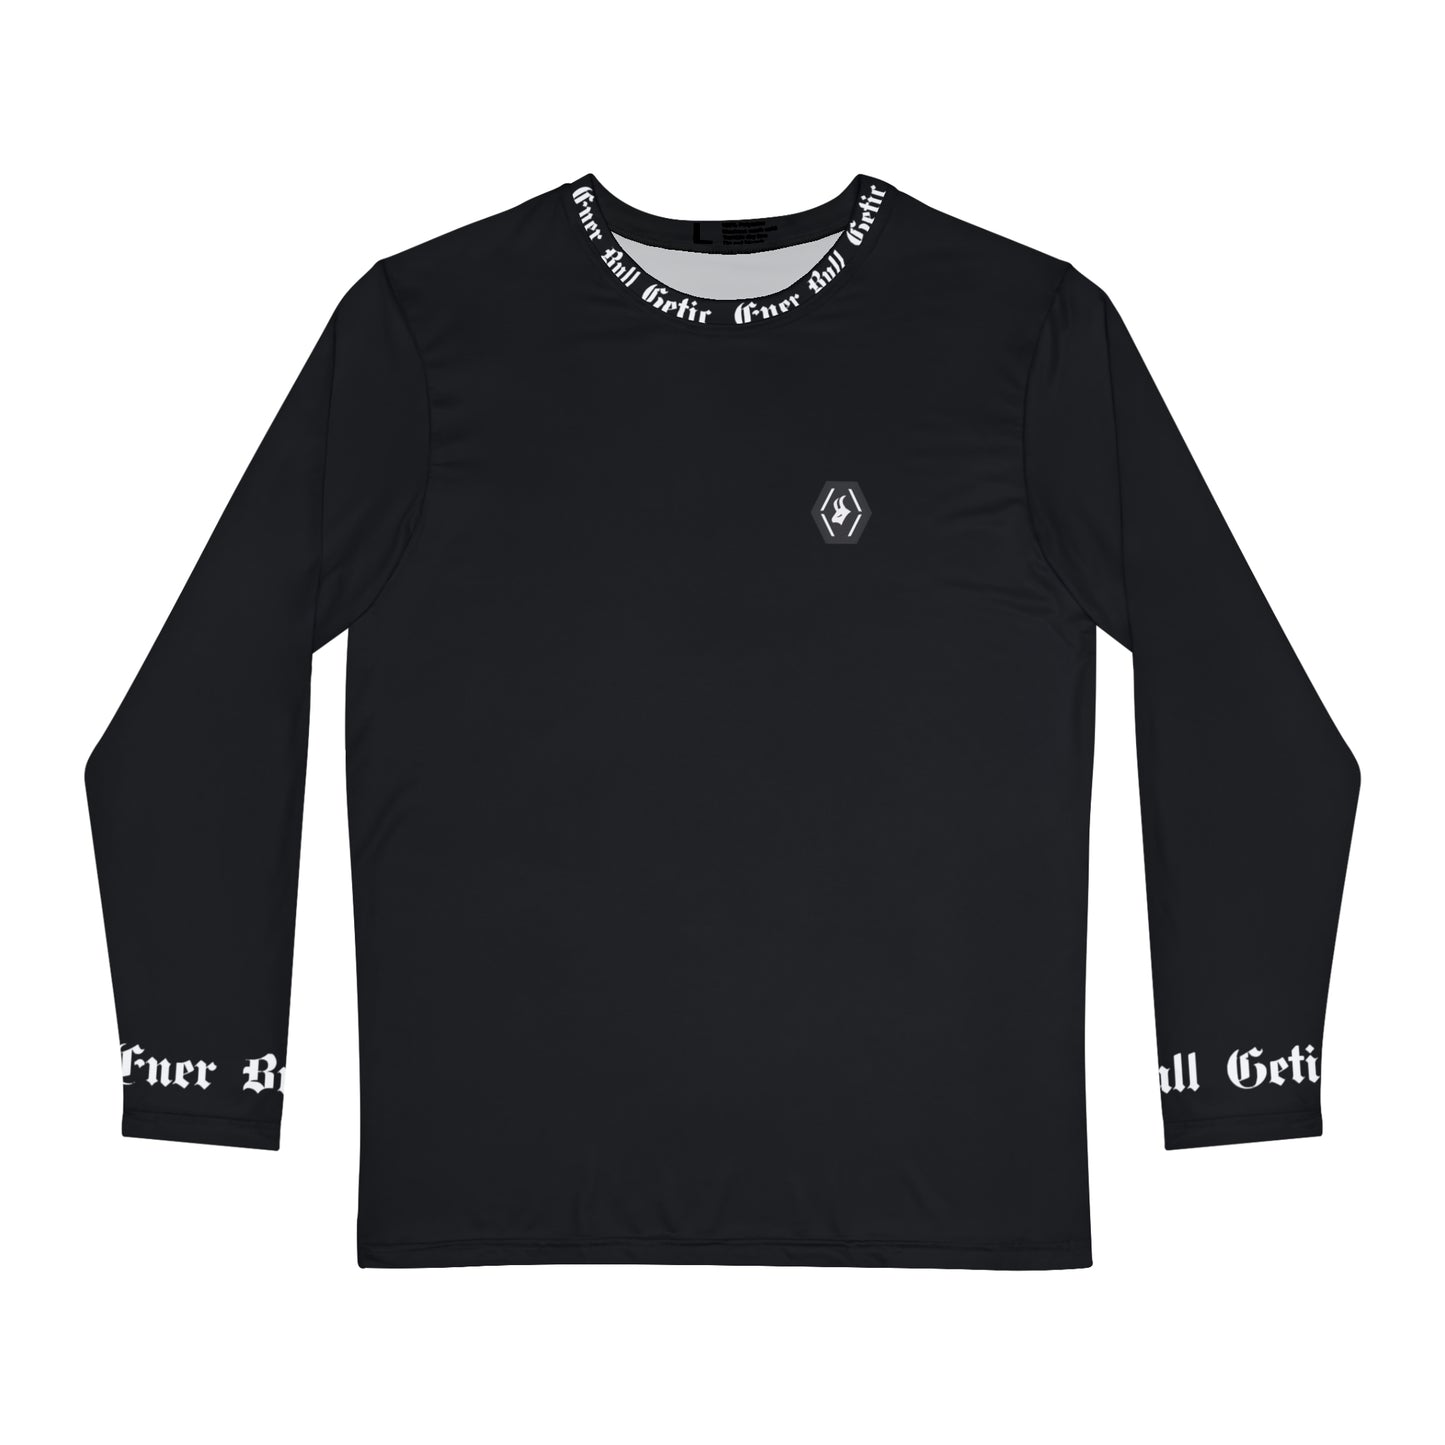 EnerBullGetic Crewneck Sleeve Shirt Black Edition